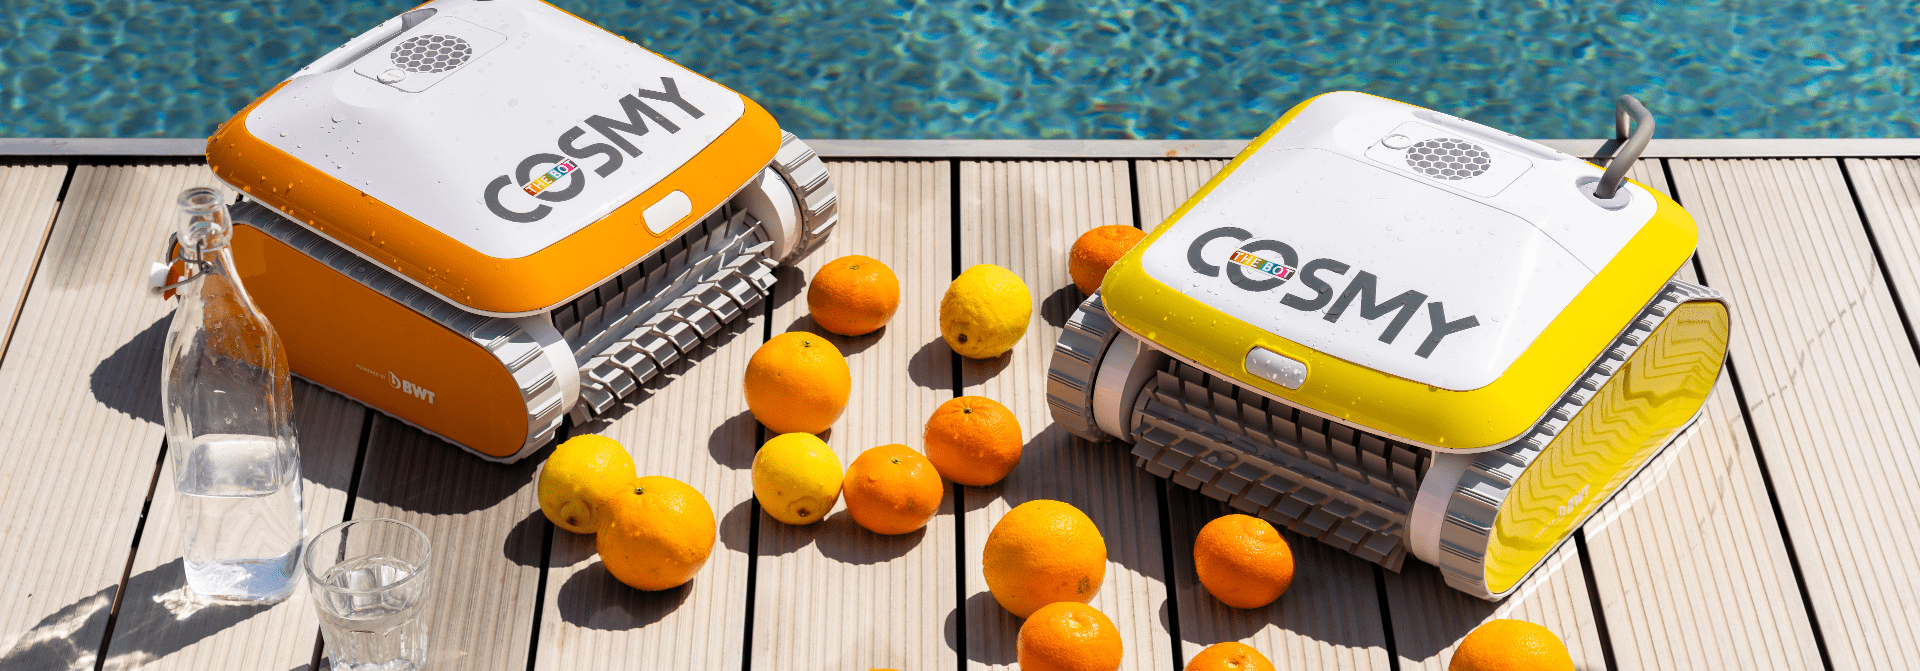 robot cosmy orange et jaune